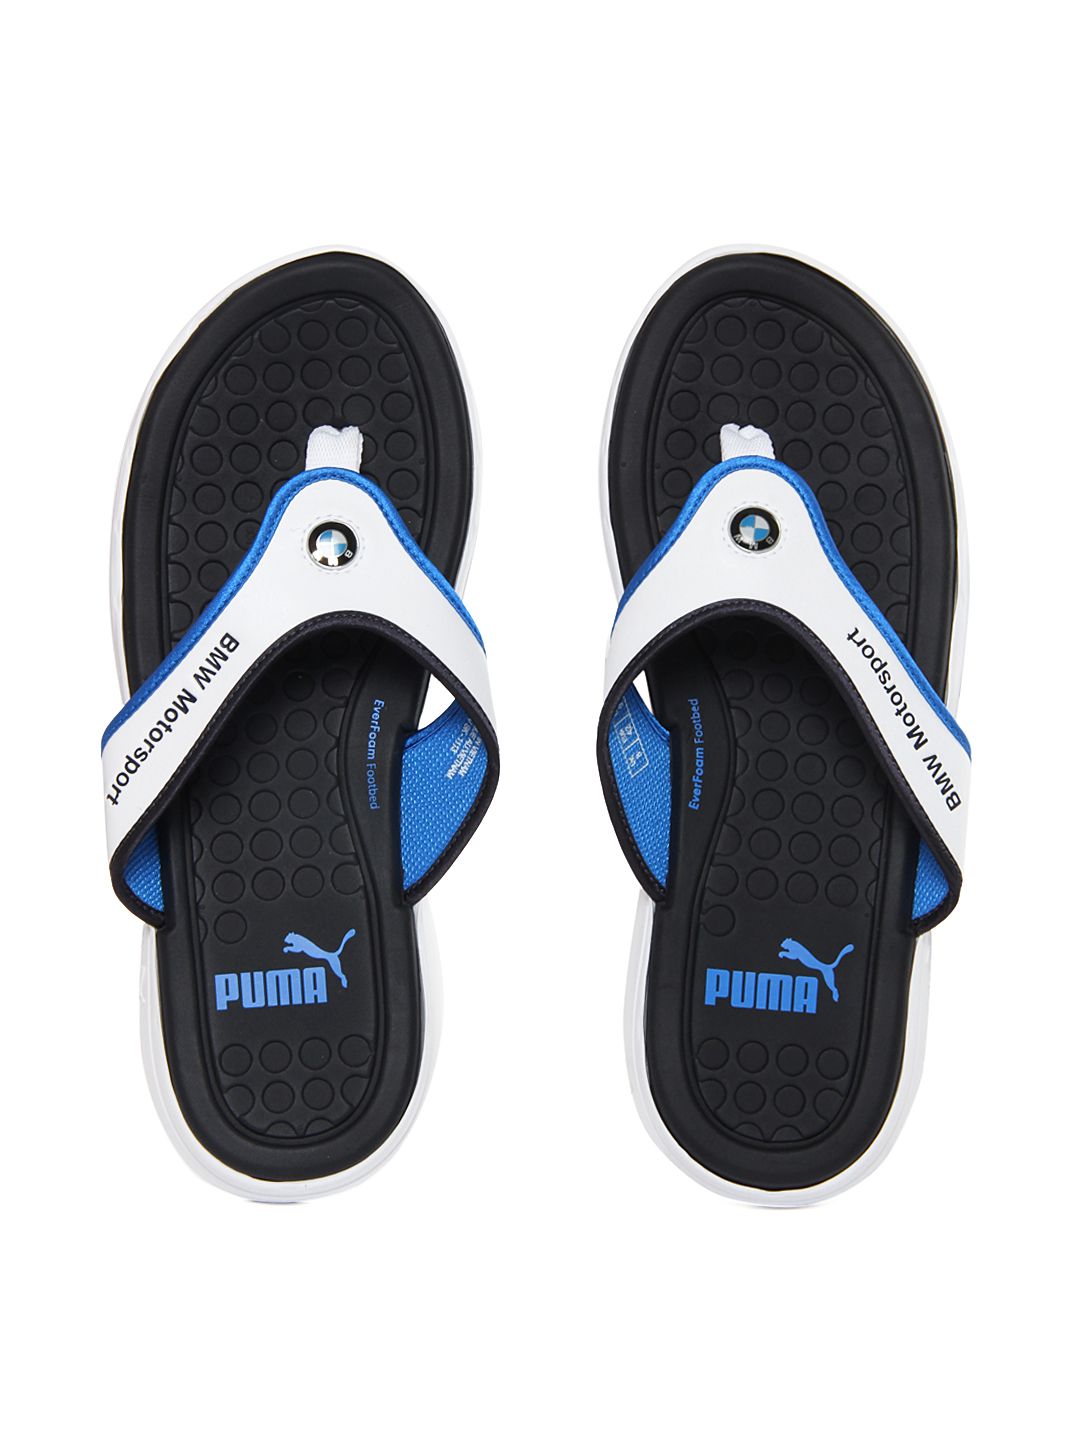 puma flip flops online